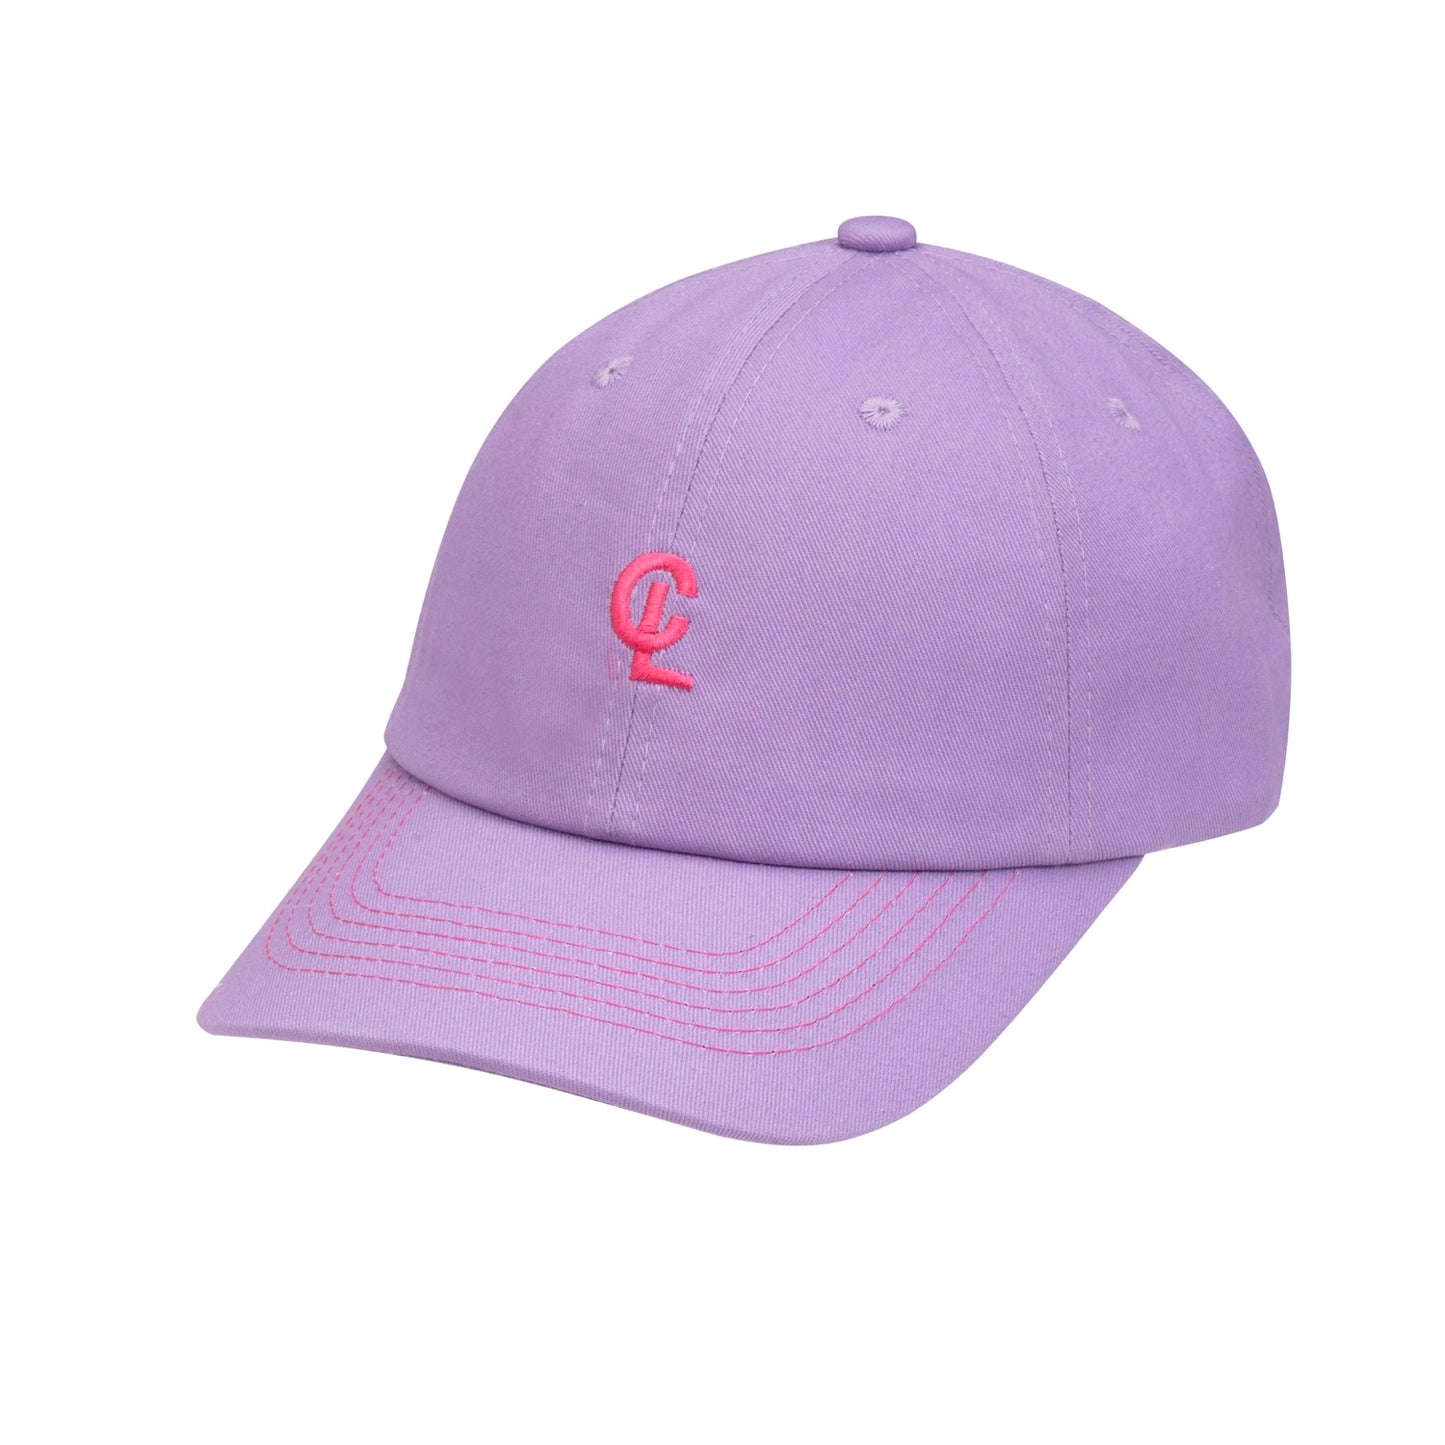 CL CAP HAT